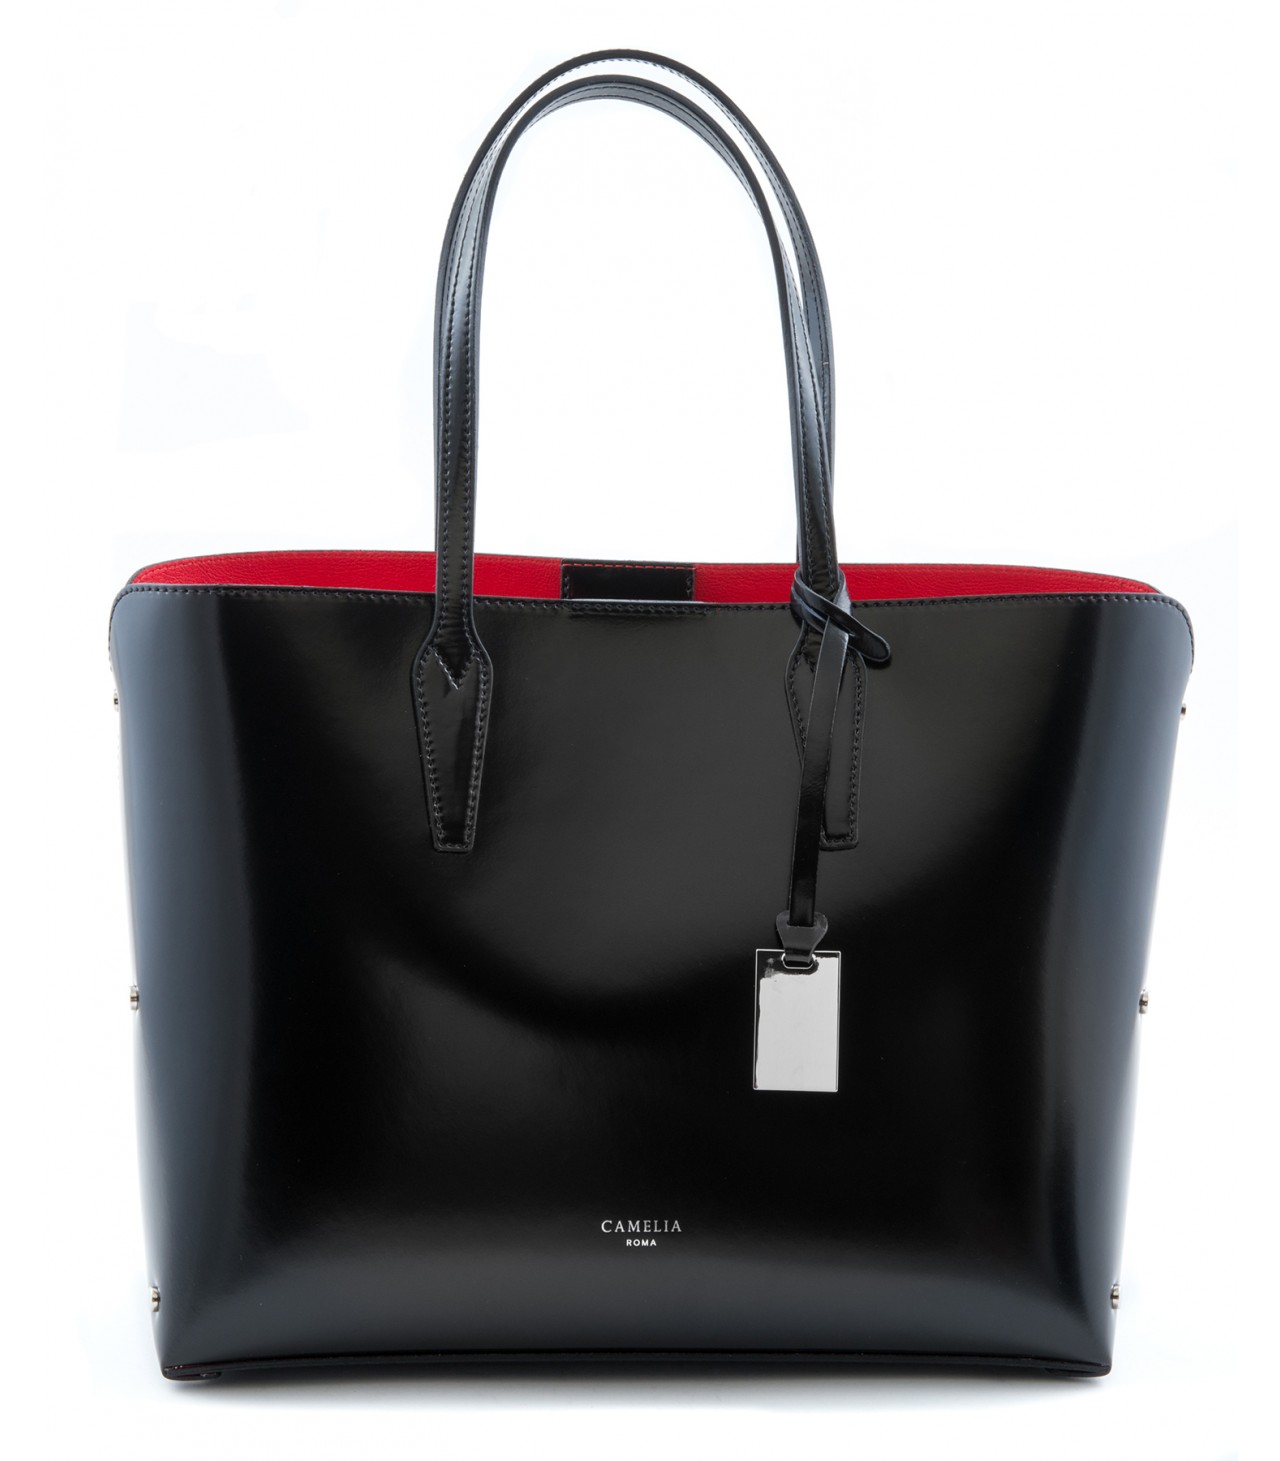 Patent Leather tote bag - Camelia Roma